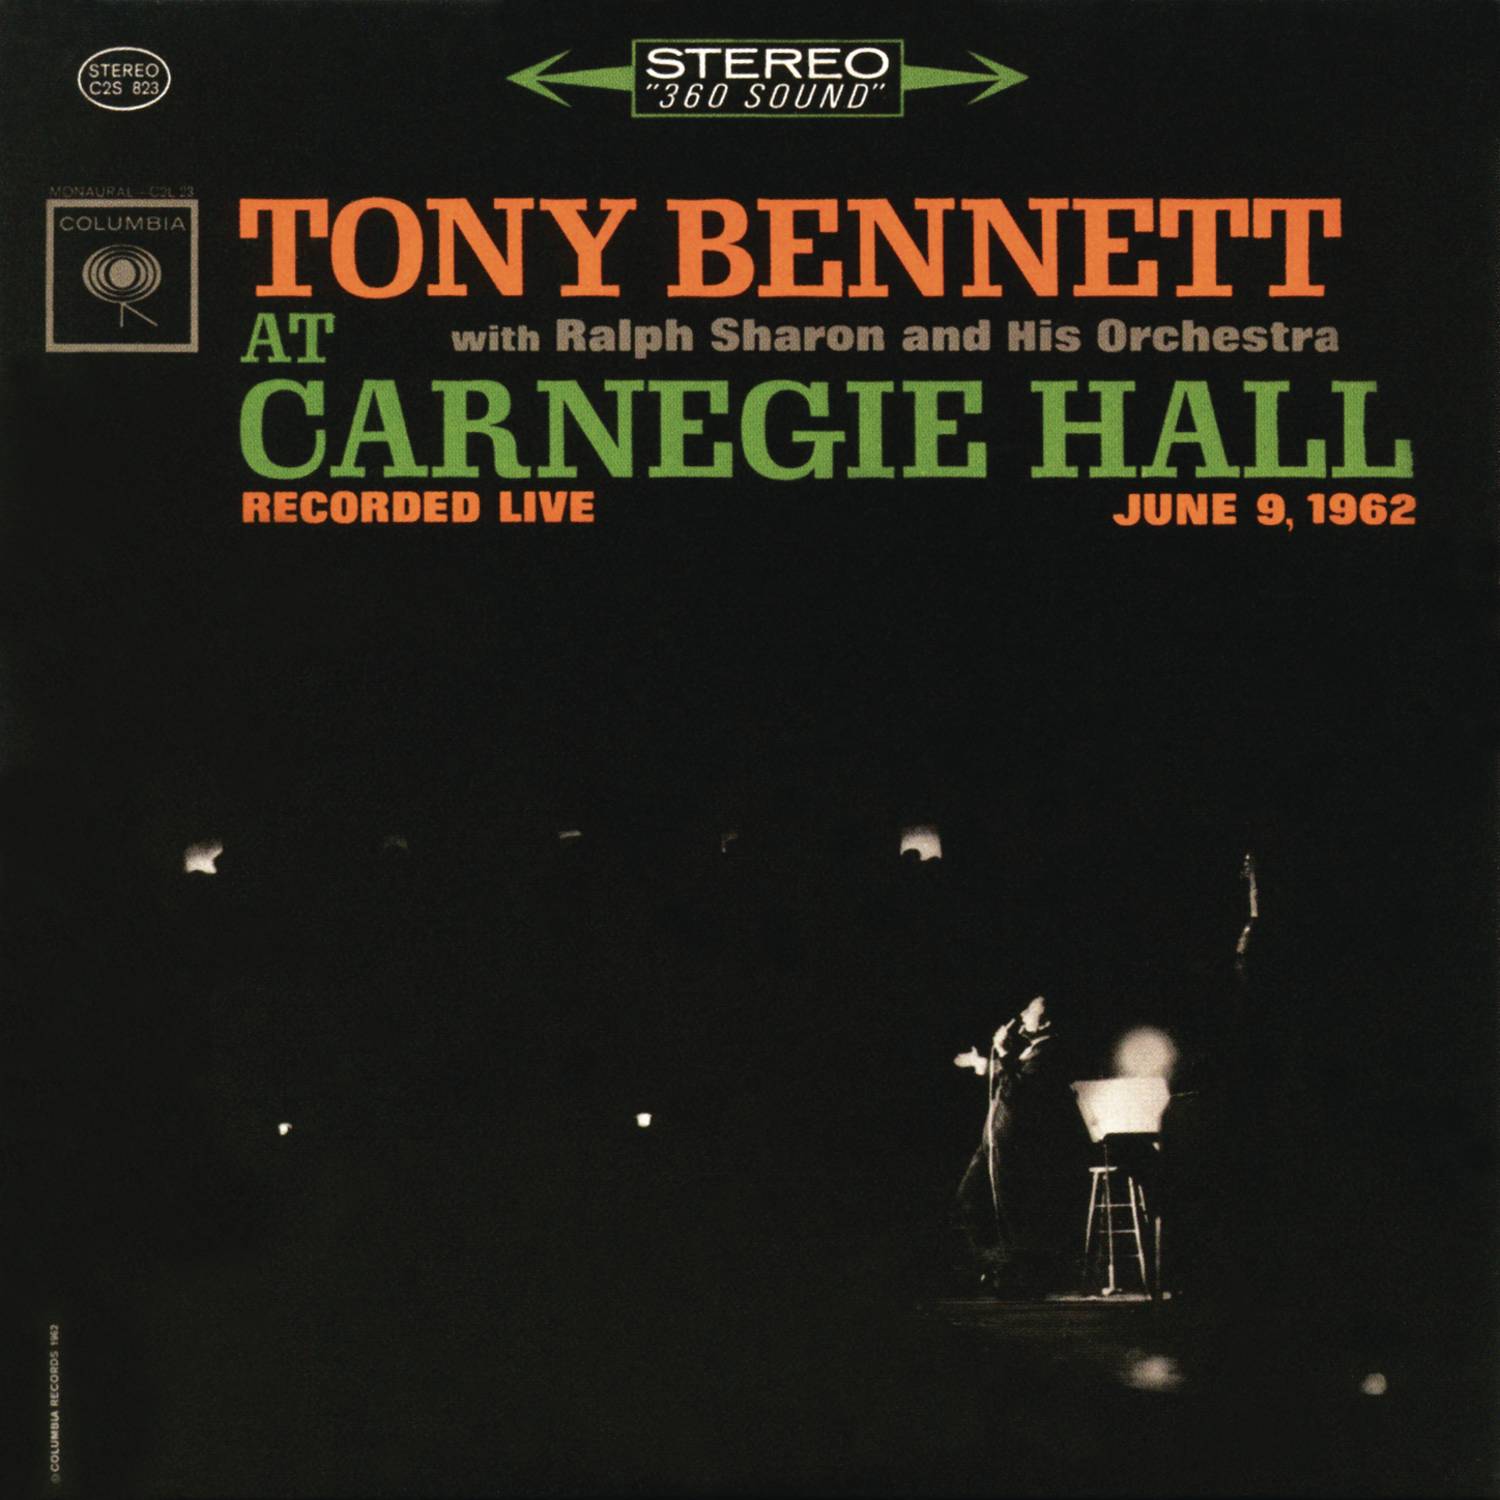 Tony Bennett - At Carnegie Hall: The Complete Concert (1962/2016) [AcousticSounds FLAC 24bit/96kHz]